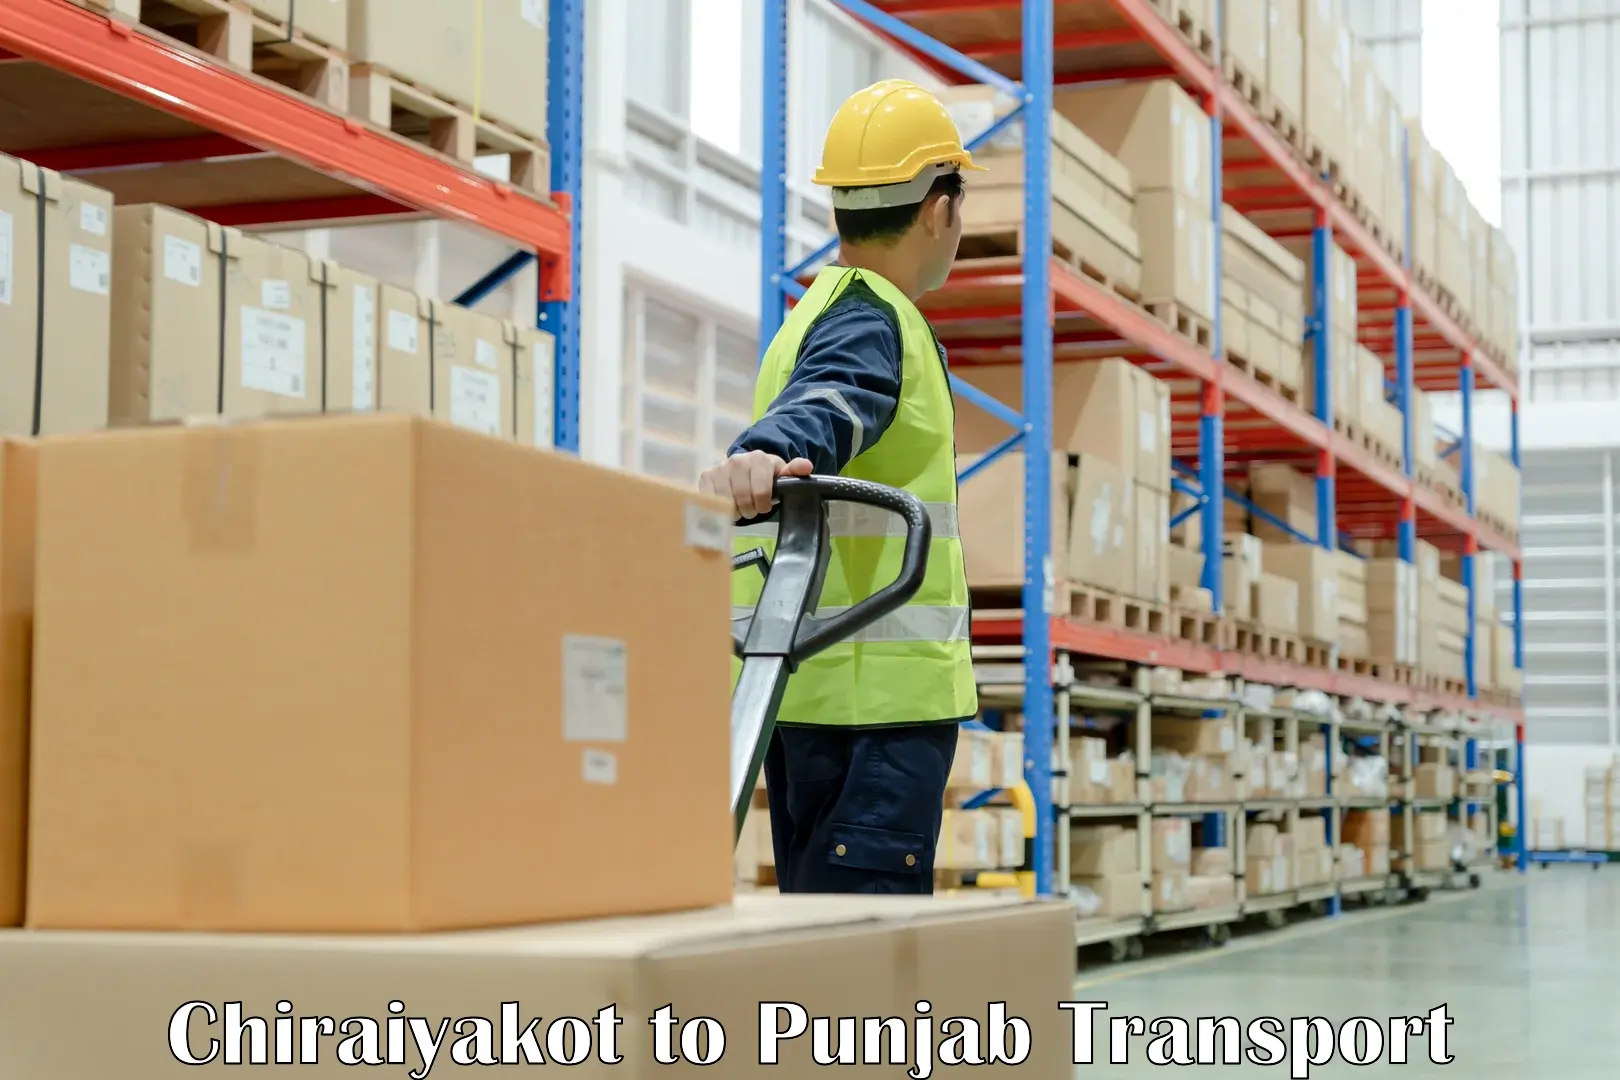 Delivery service Chiraiyakot to Punjab